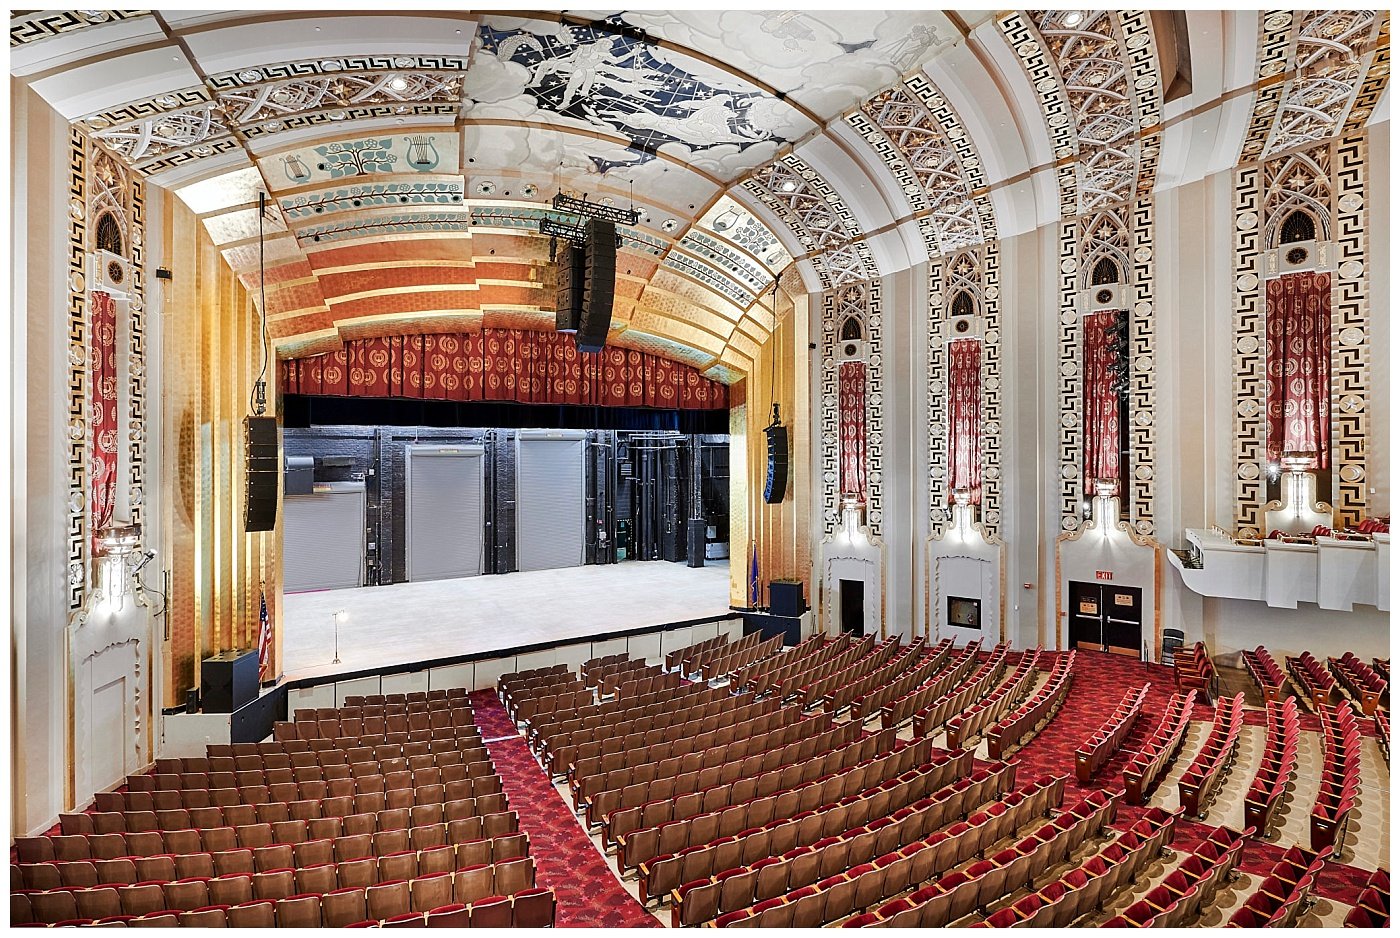 Bushnell-Center for-the-Performing Arts-Hartford-CT (5).jpg